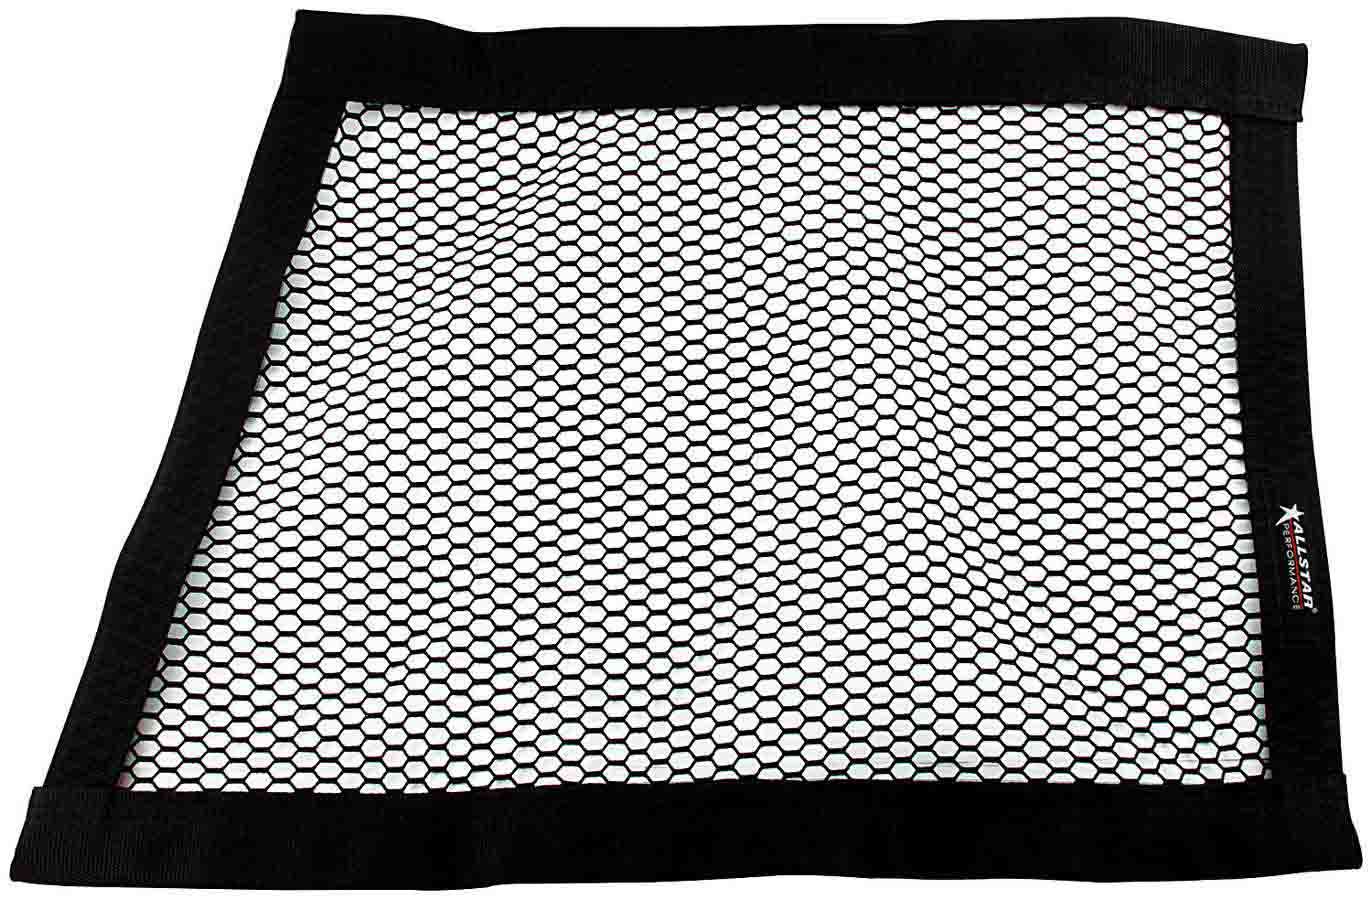 Allstar Performance 10299 Window Net, Mesh, 18 x 27 x 22 in Trapezoid, Black, Each